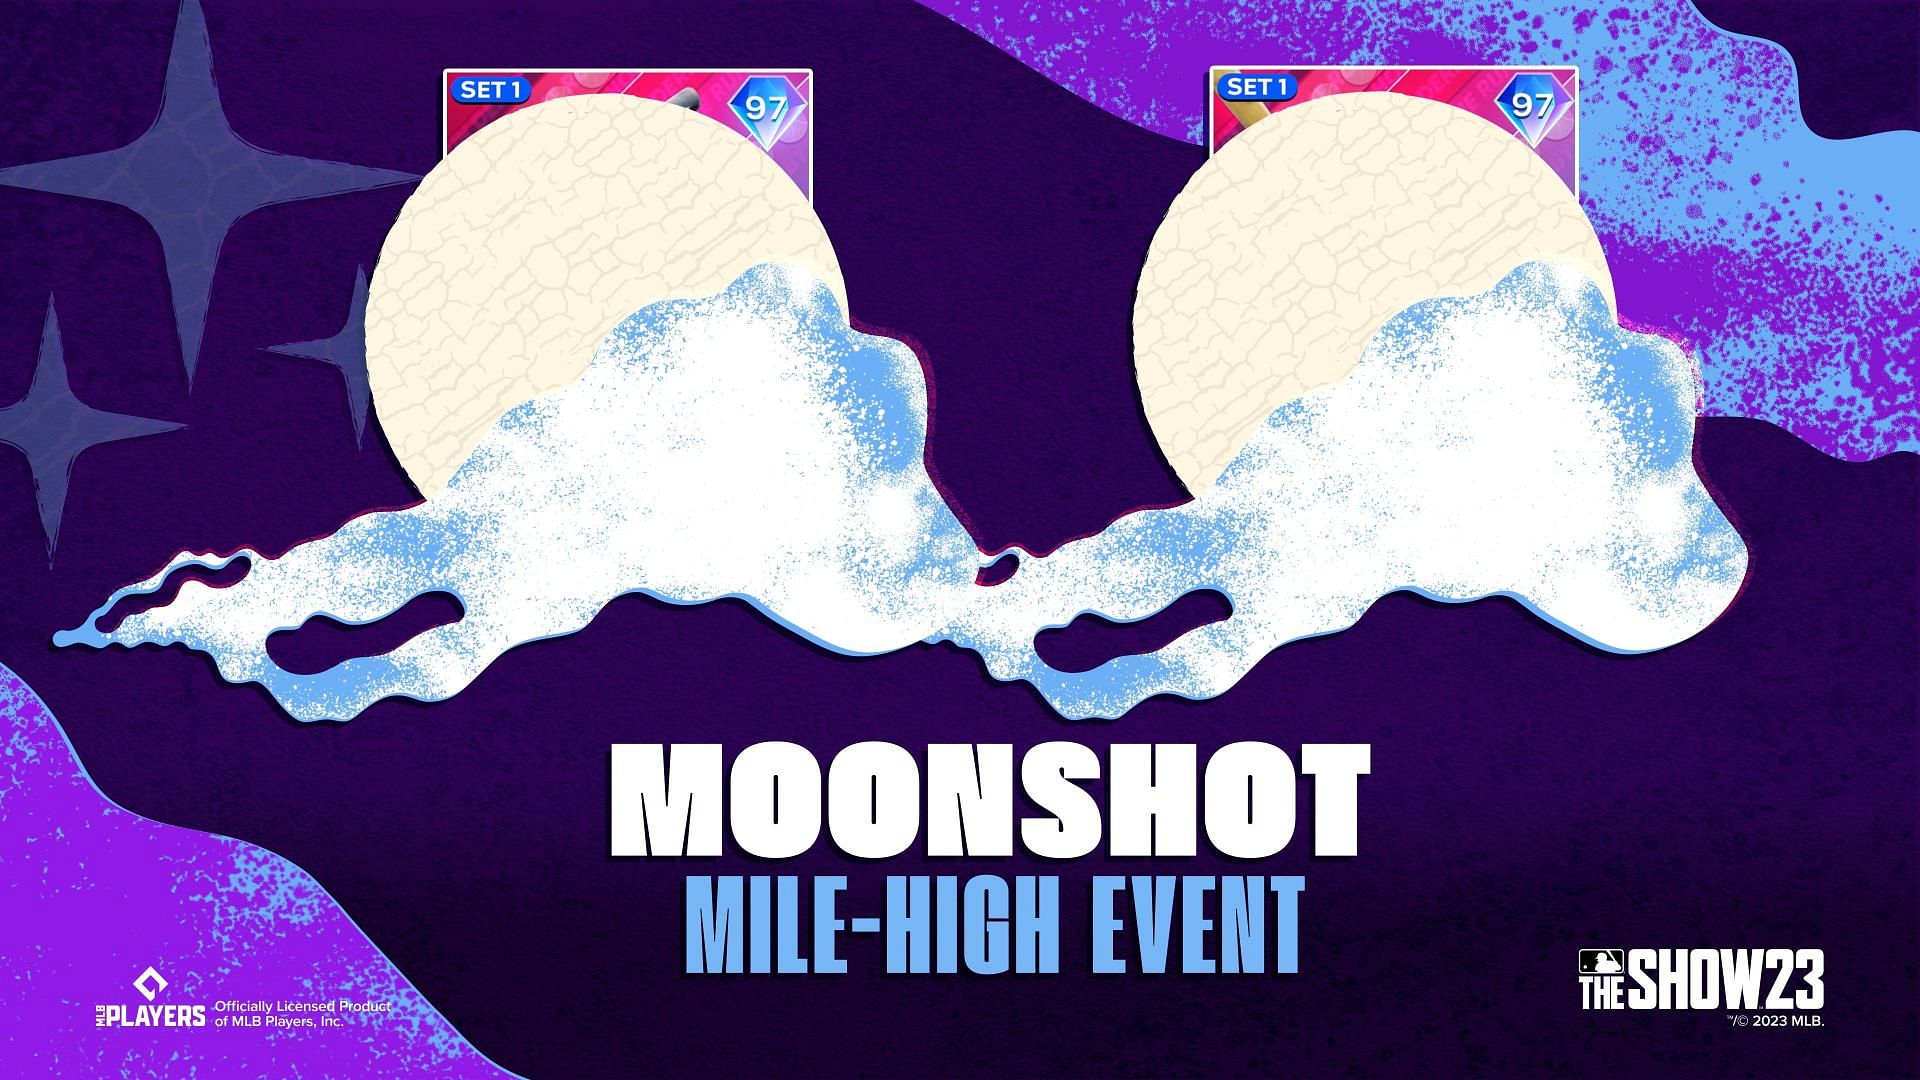 Moonshot Mile High Event MLB The Show 23 Moonshot Mile High Event